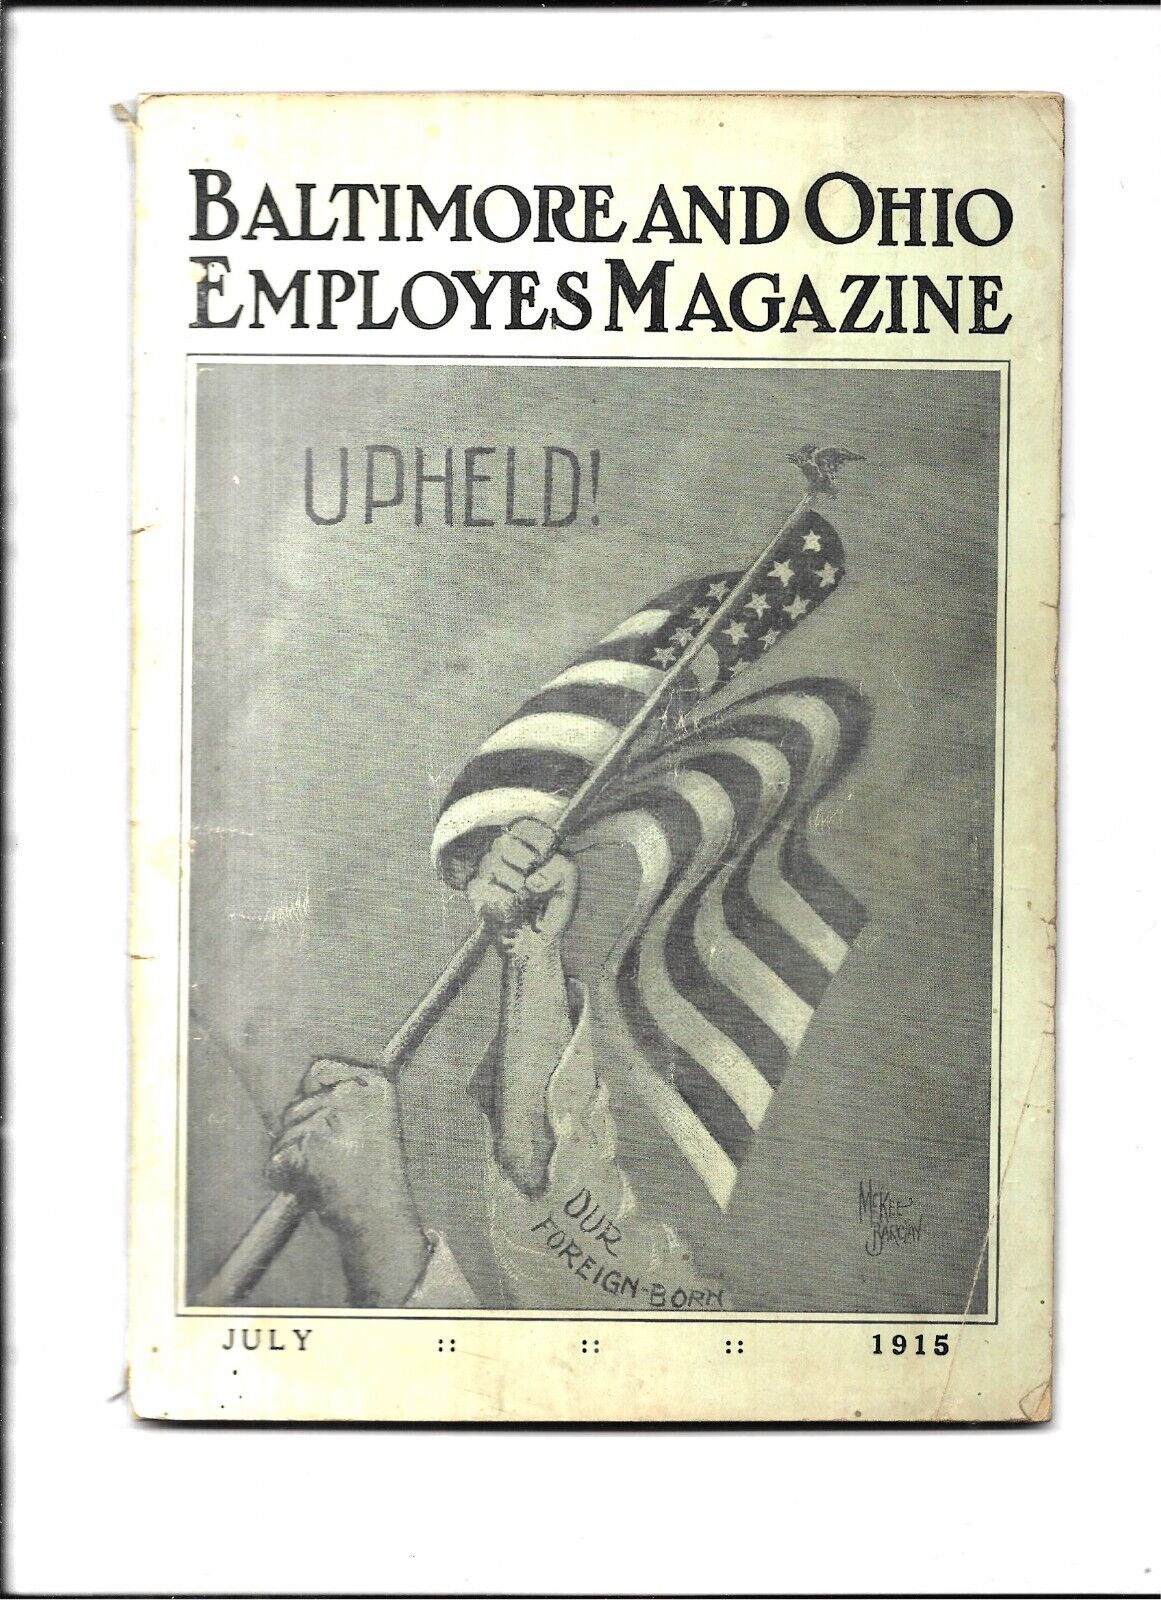 Baltimore and Ohio Employes Magazine (July, 1915)